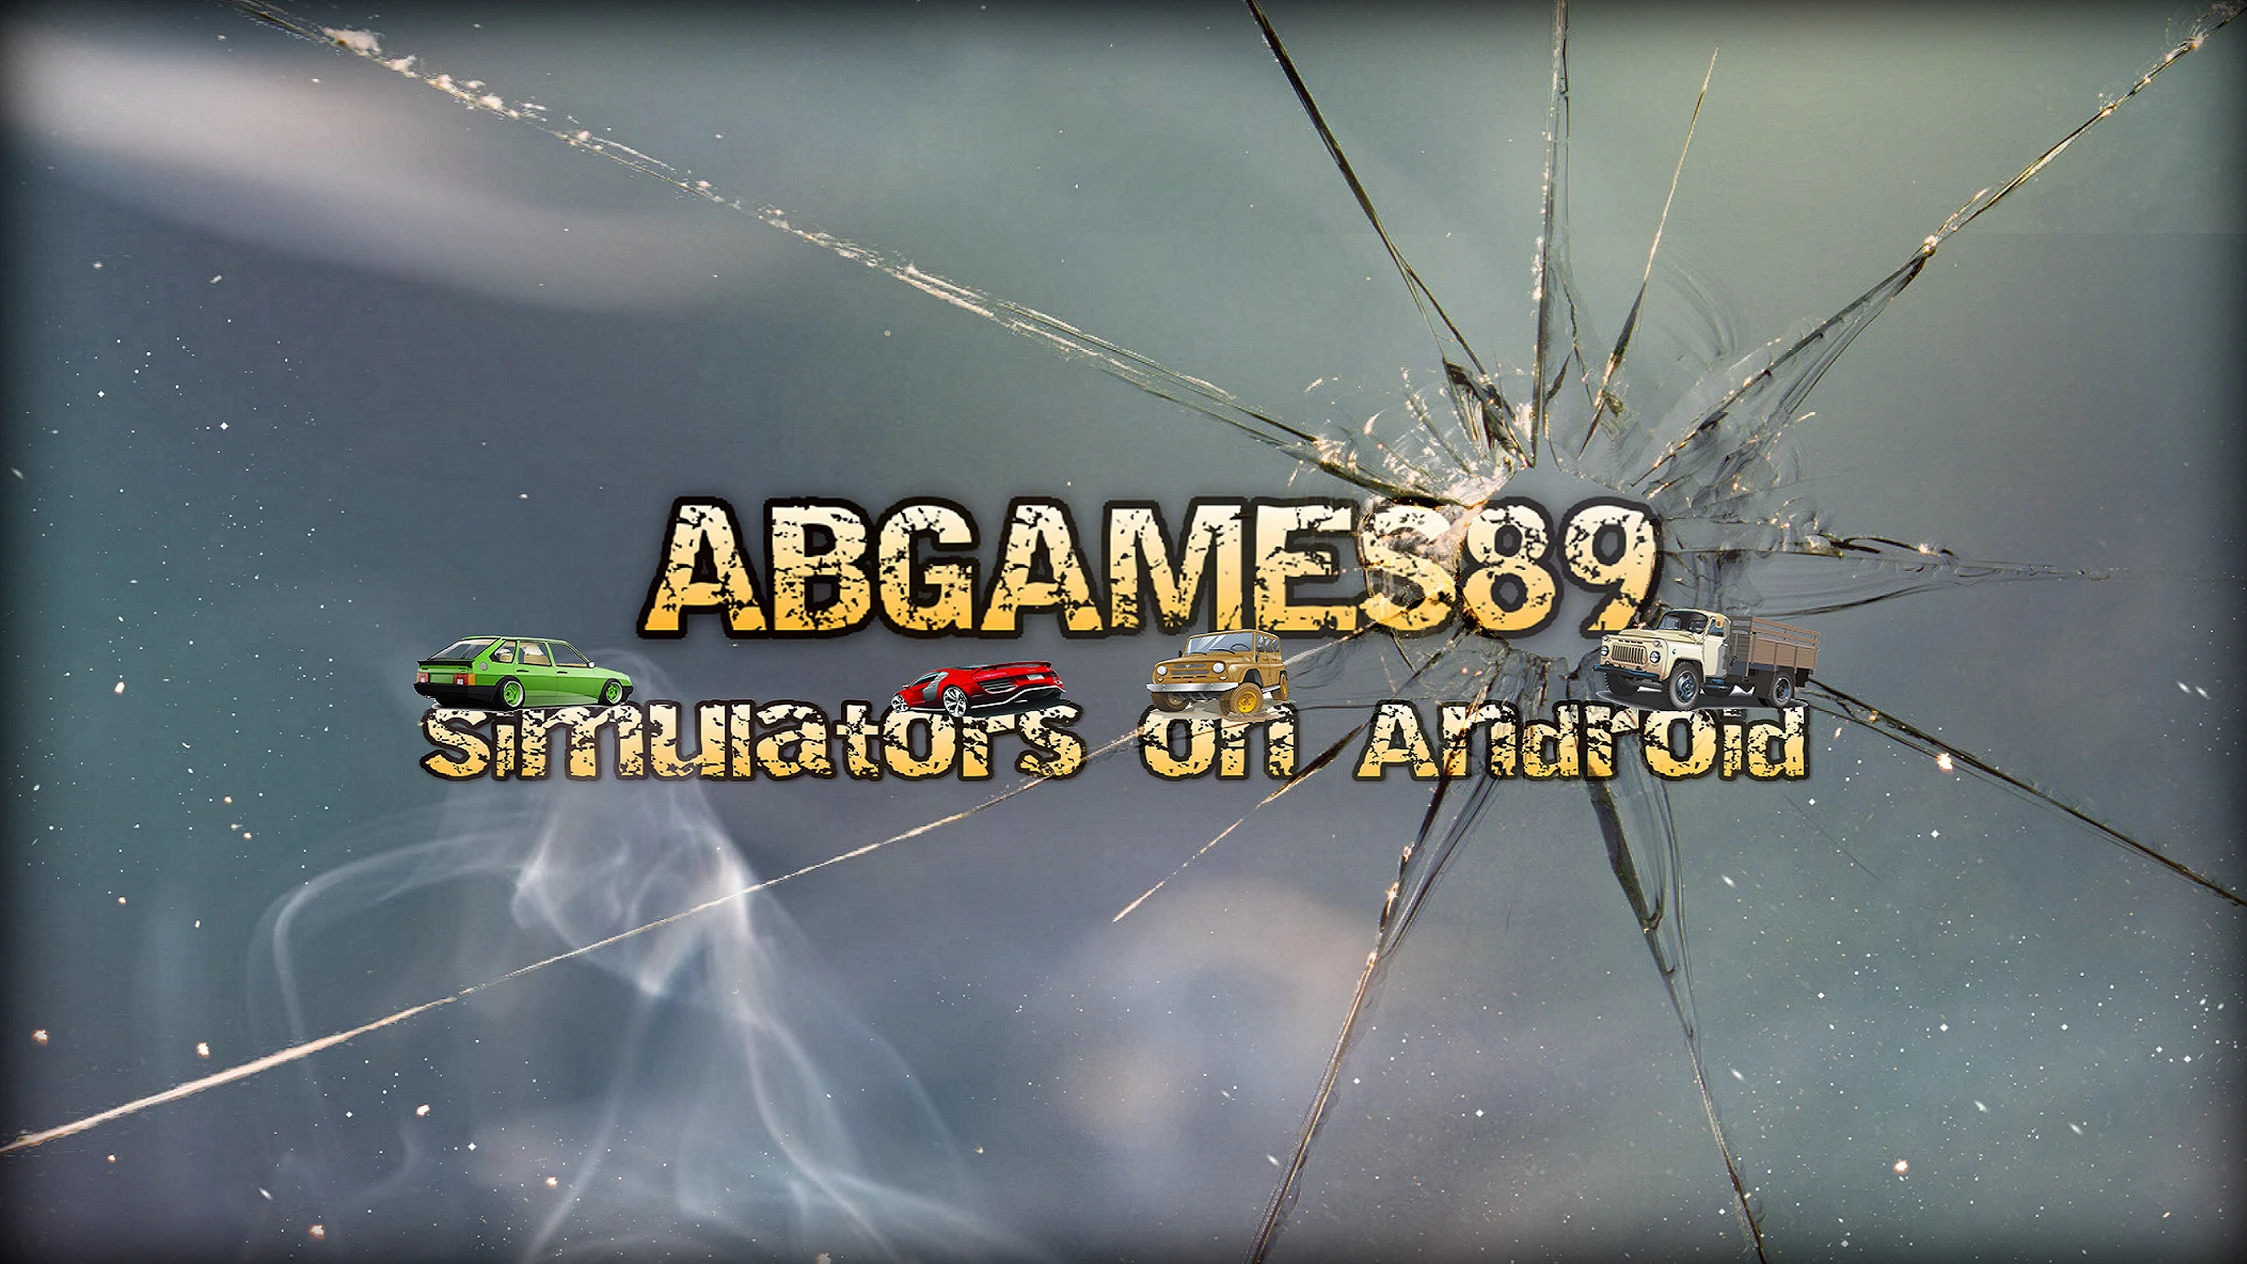 ABGames89